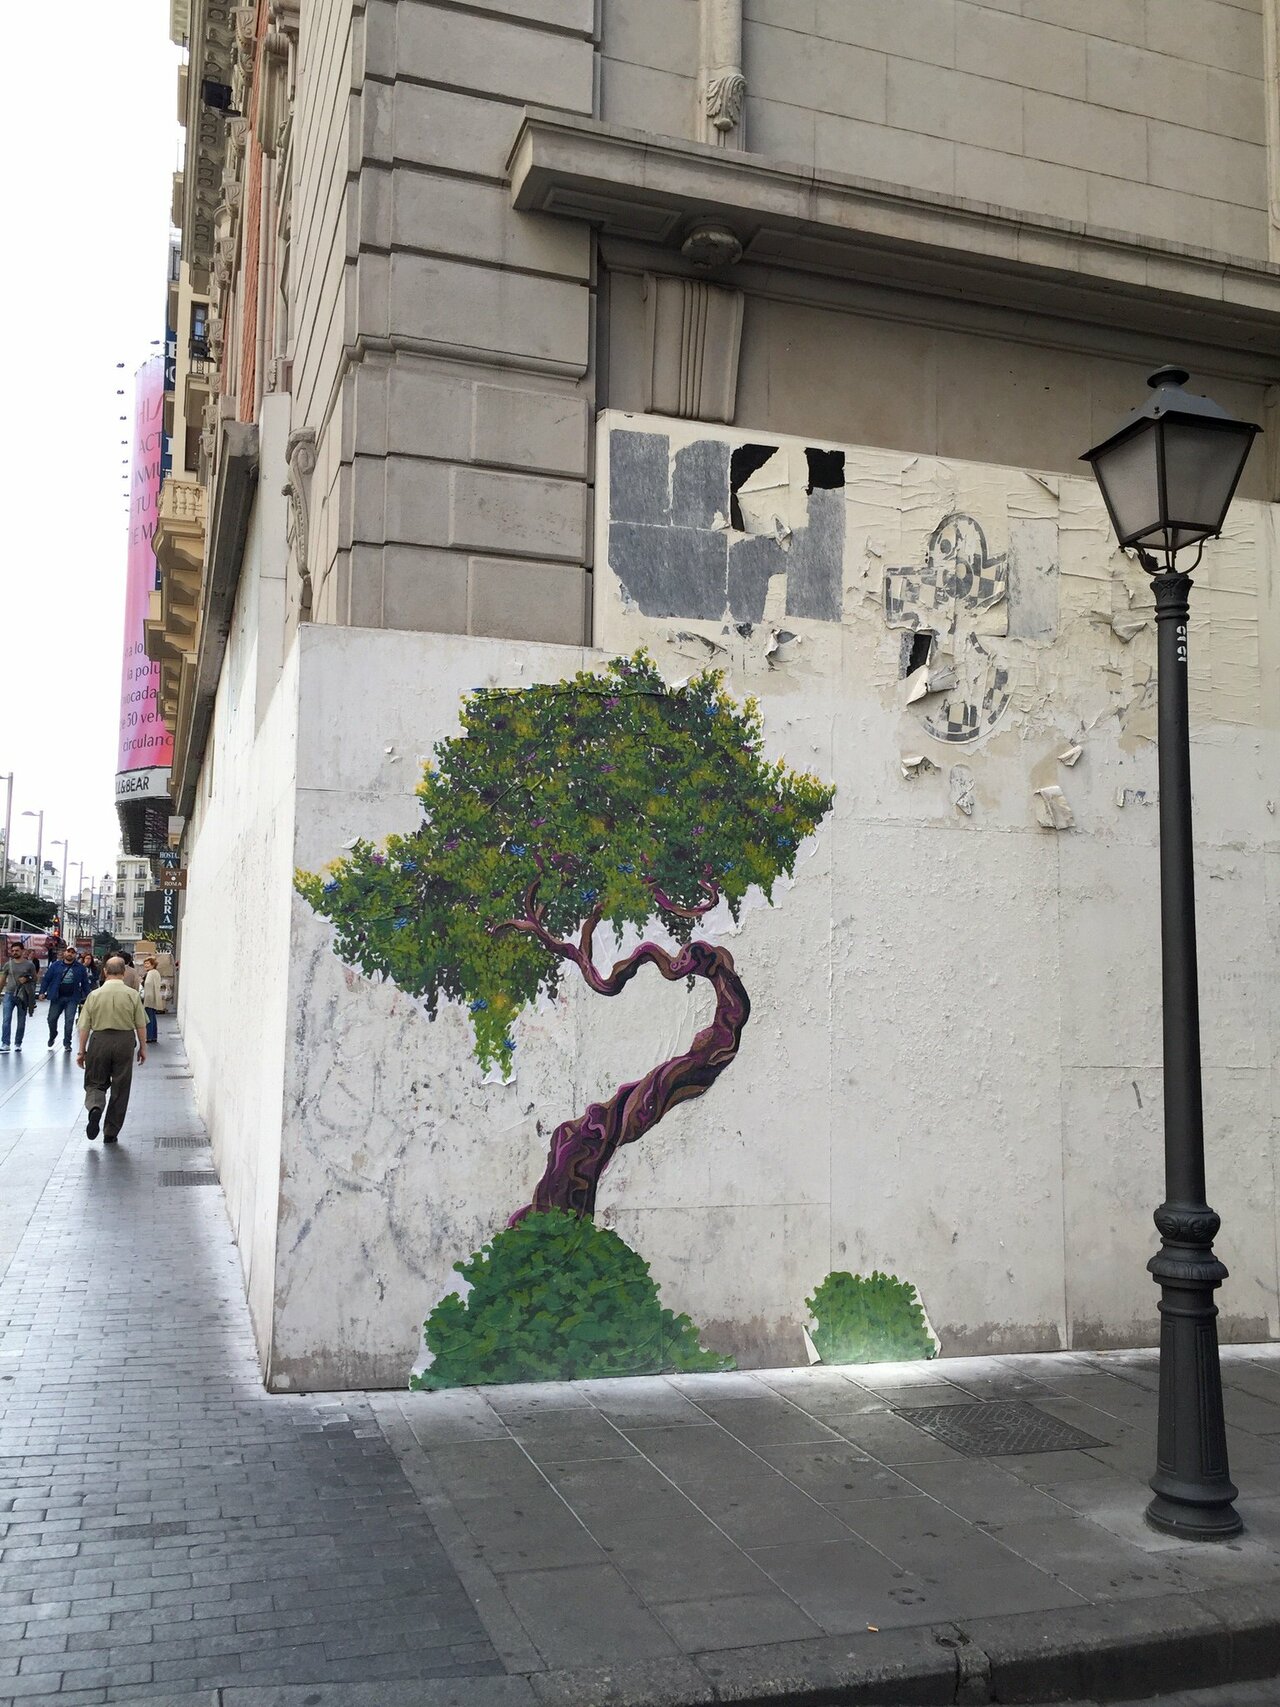 #Graffiti de hoy: << Whimsical >> #LaGranVia #Madrid #España #StreetArt #UrbanArt #ArteUrbano https://t.co/2Utgwtq82M